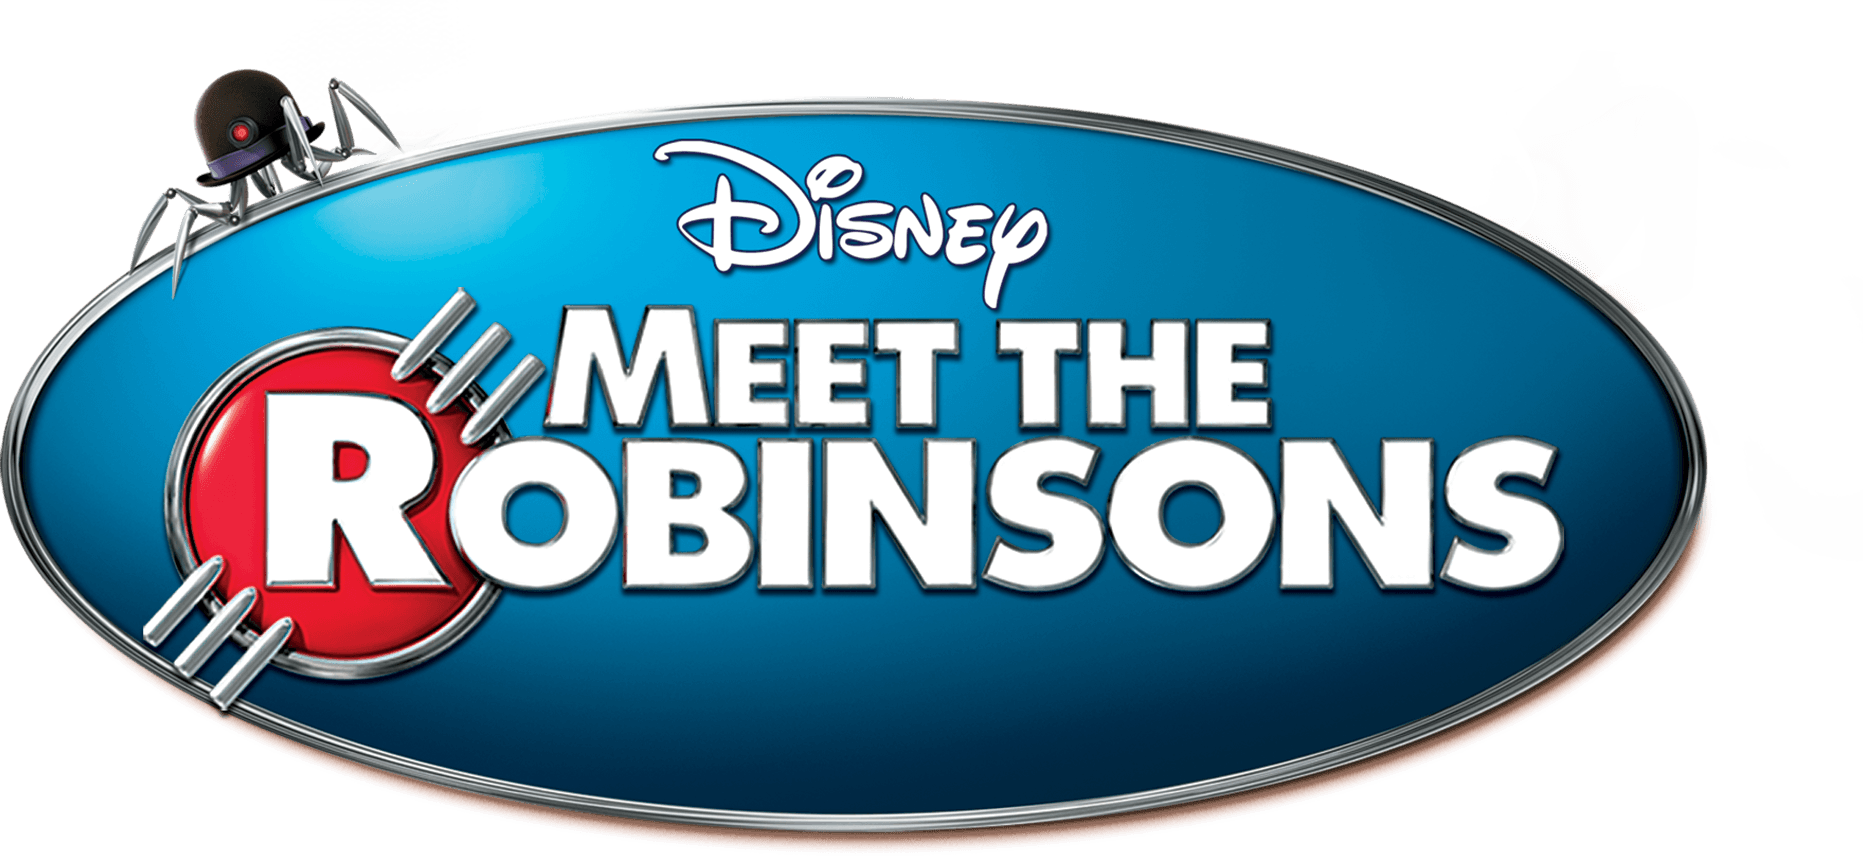 Meet the Robinsons logo